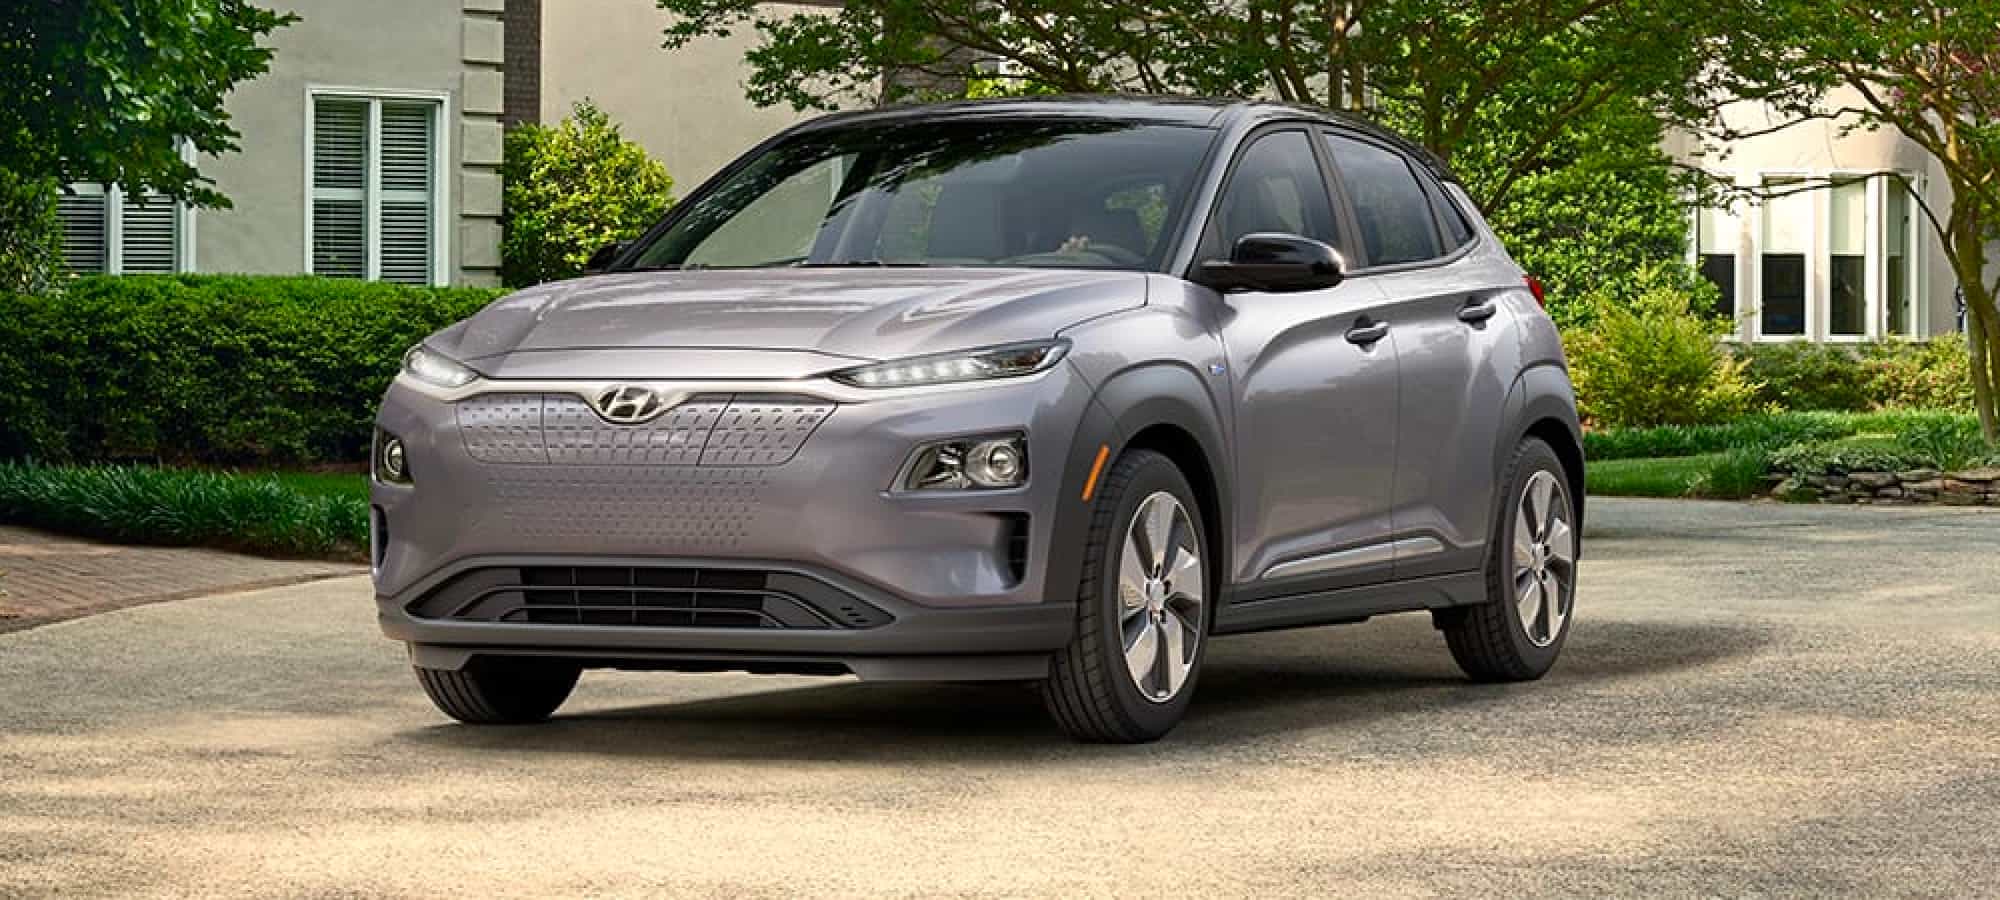 2019 Hyundai Kona Electric Colors, Price, Specs | Hyundai Of El Paso